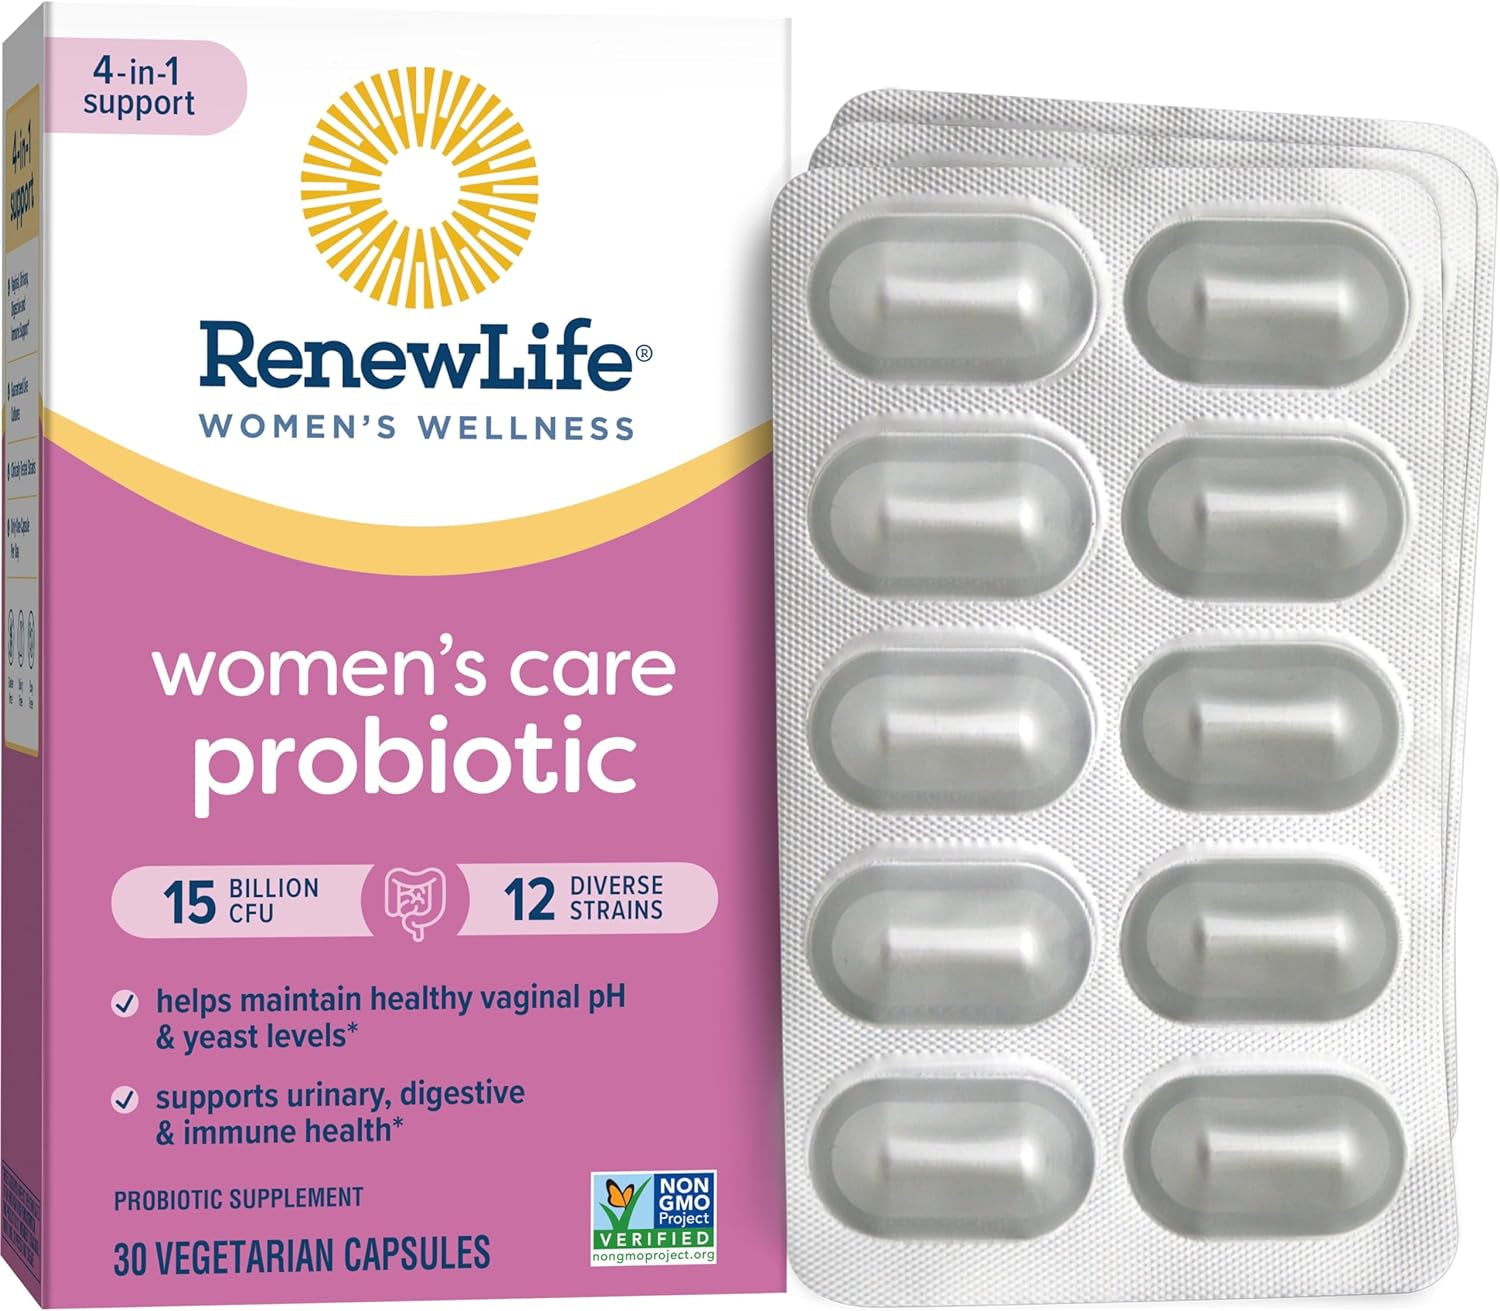 "Renew Life Women's Probiotic: Supports Women's Health, 15 & 25 Billion CFU - 30 Ct"